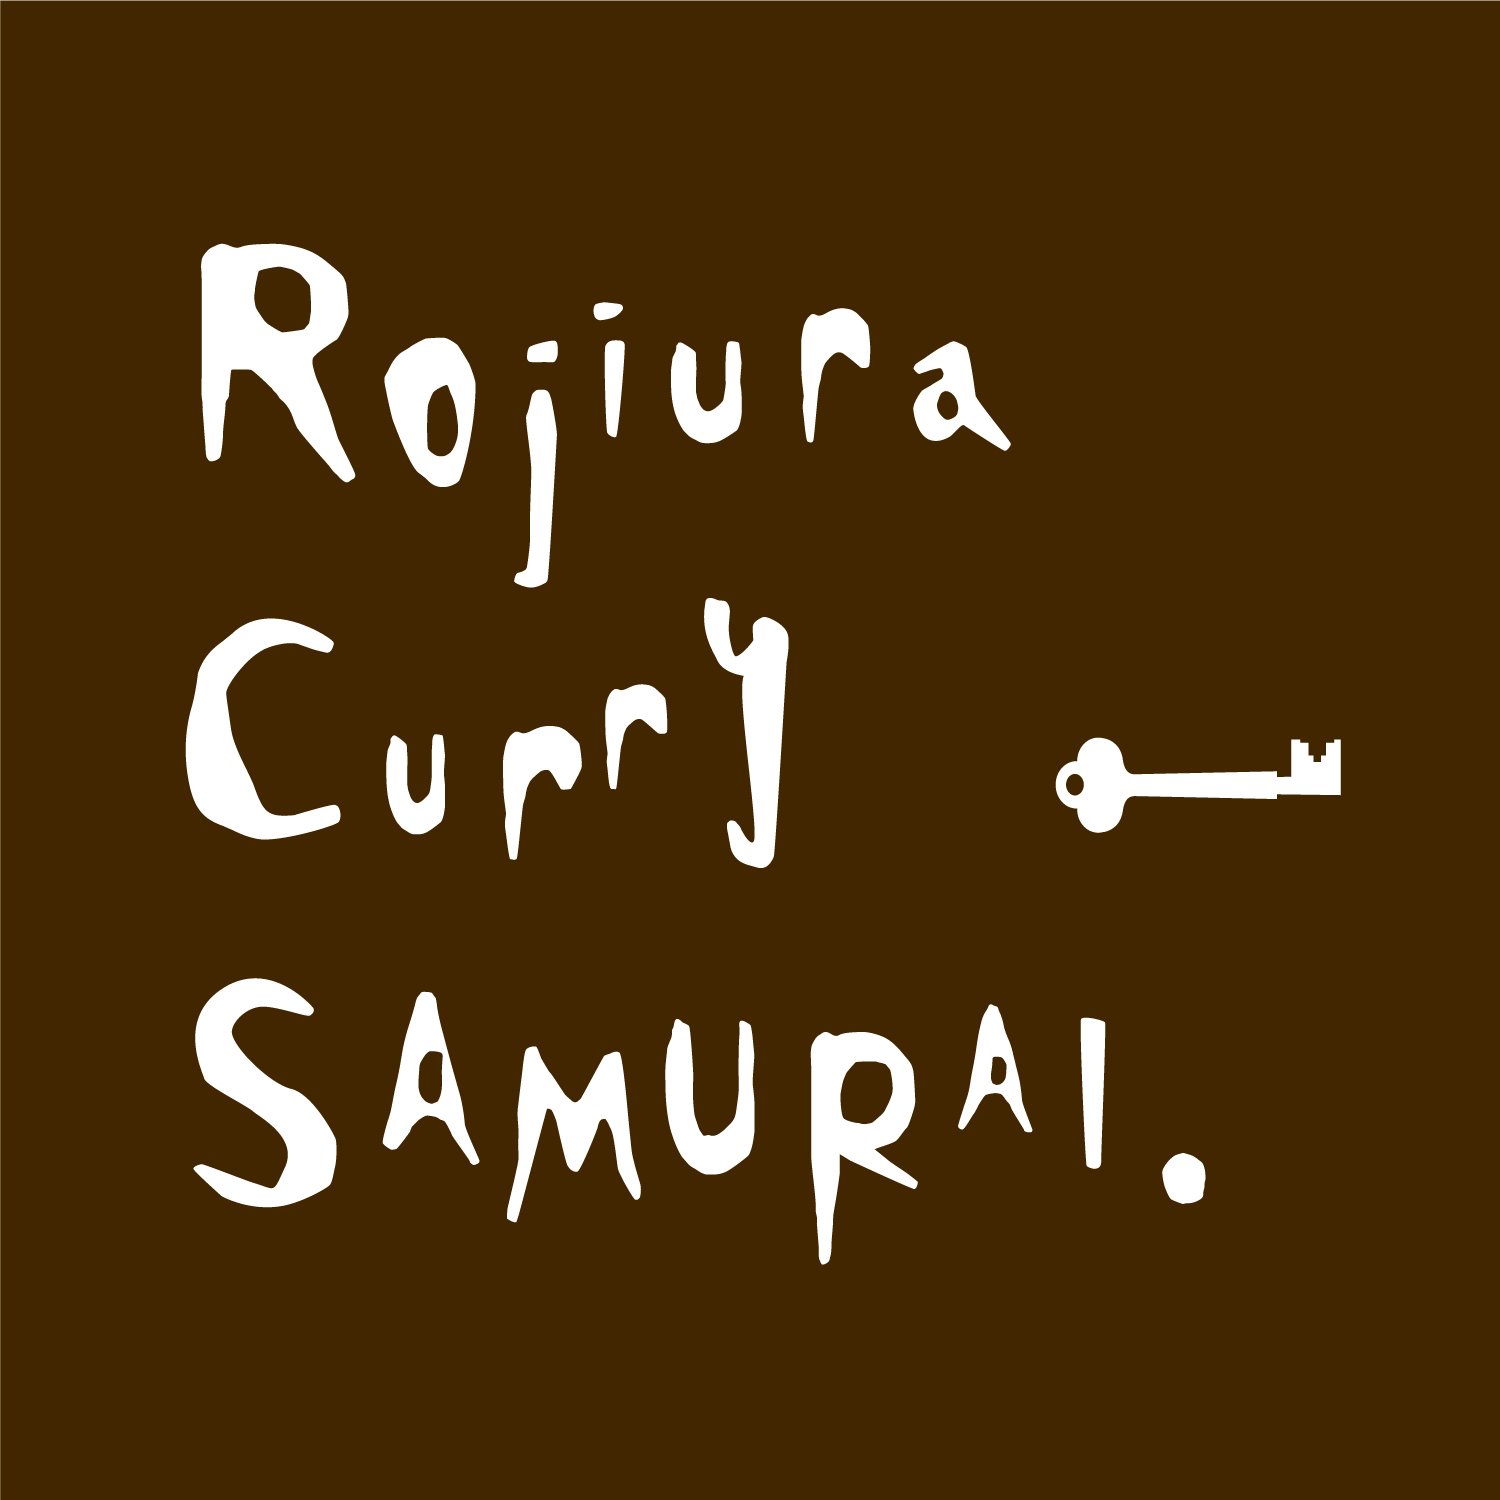 Rojiura　Curry　SAMURAI.